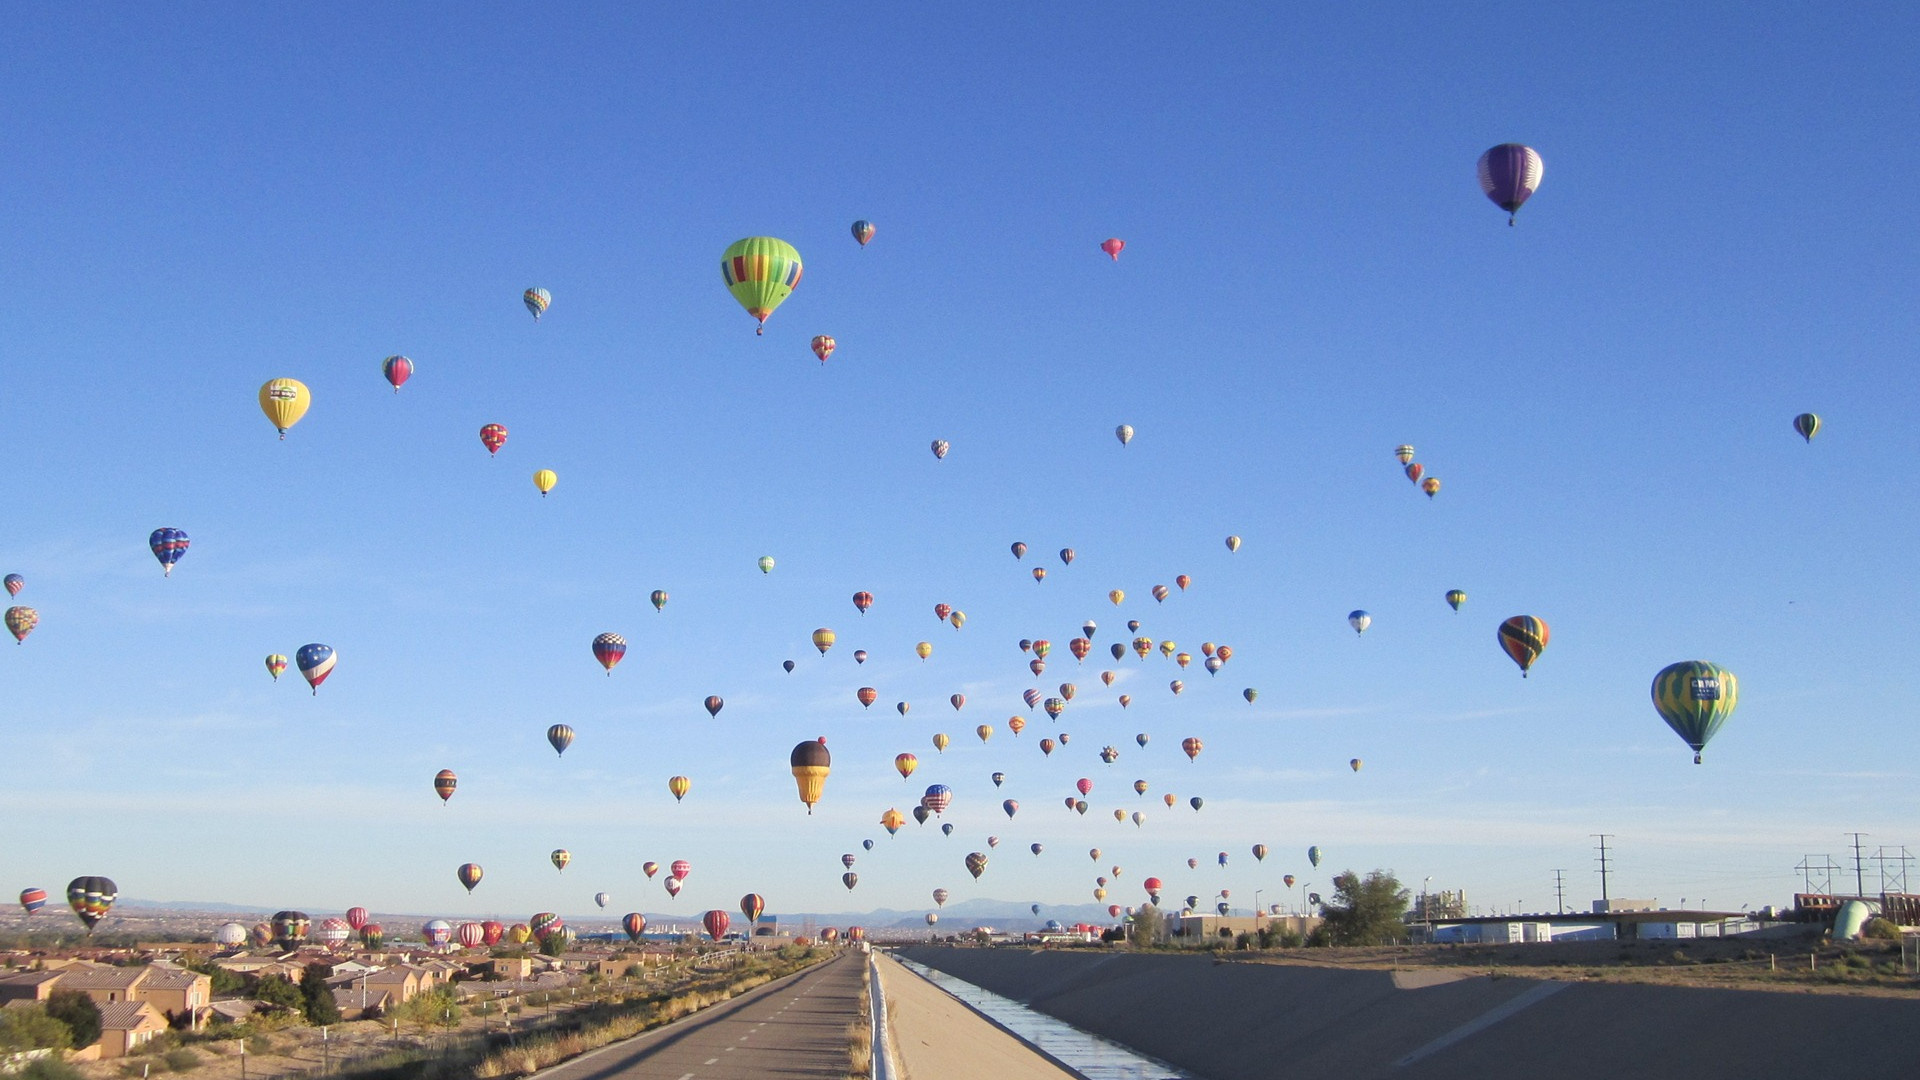 Albuquerque international balloon fiesta, HD wallpapers, Balloons, New Mexico travels, 1920x1080 Full HD Desktop